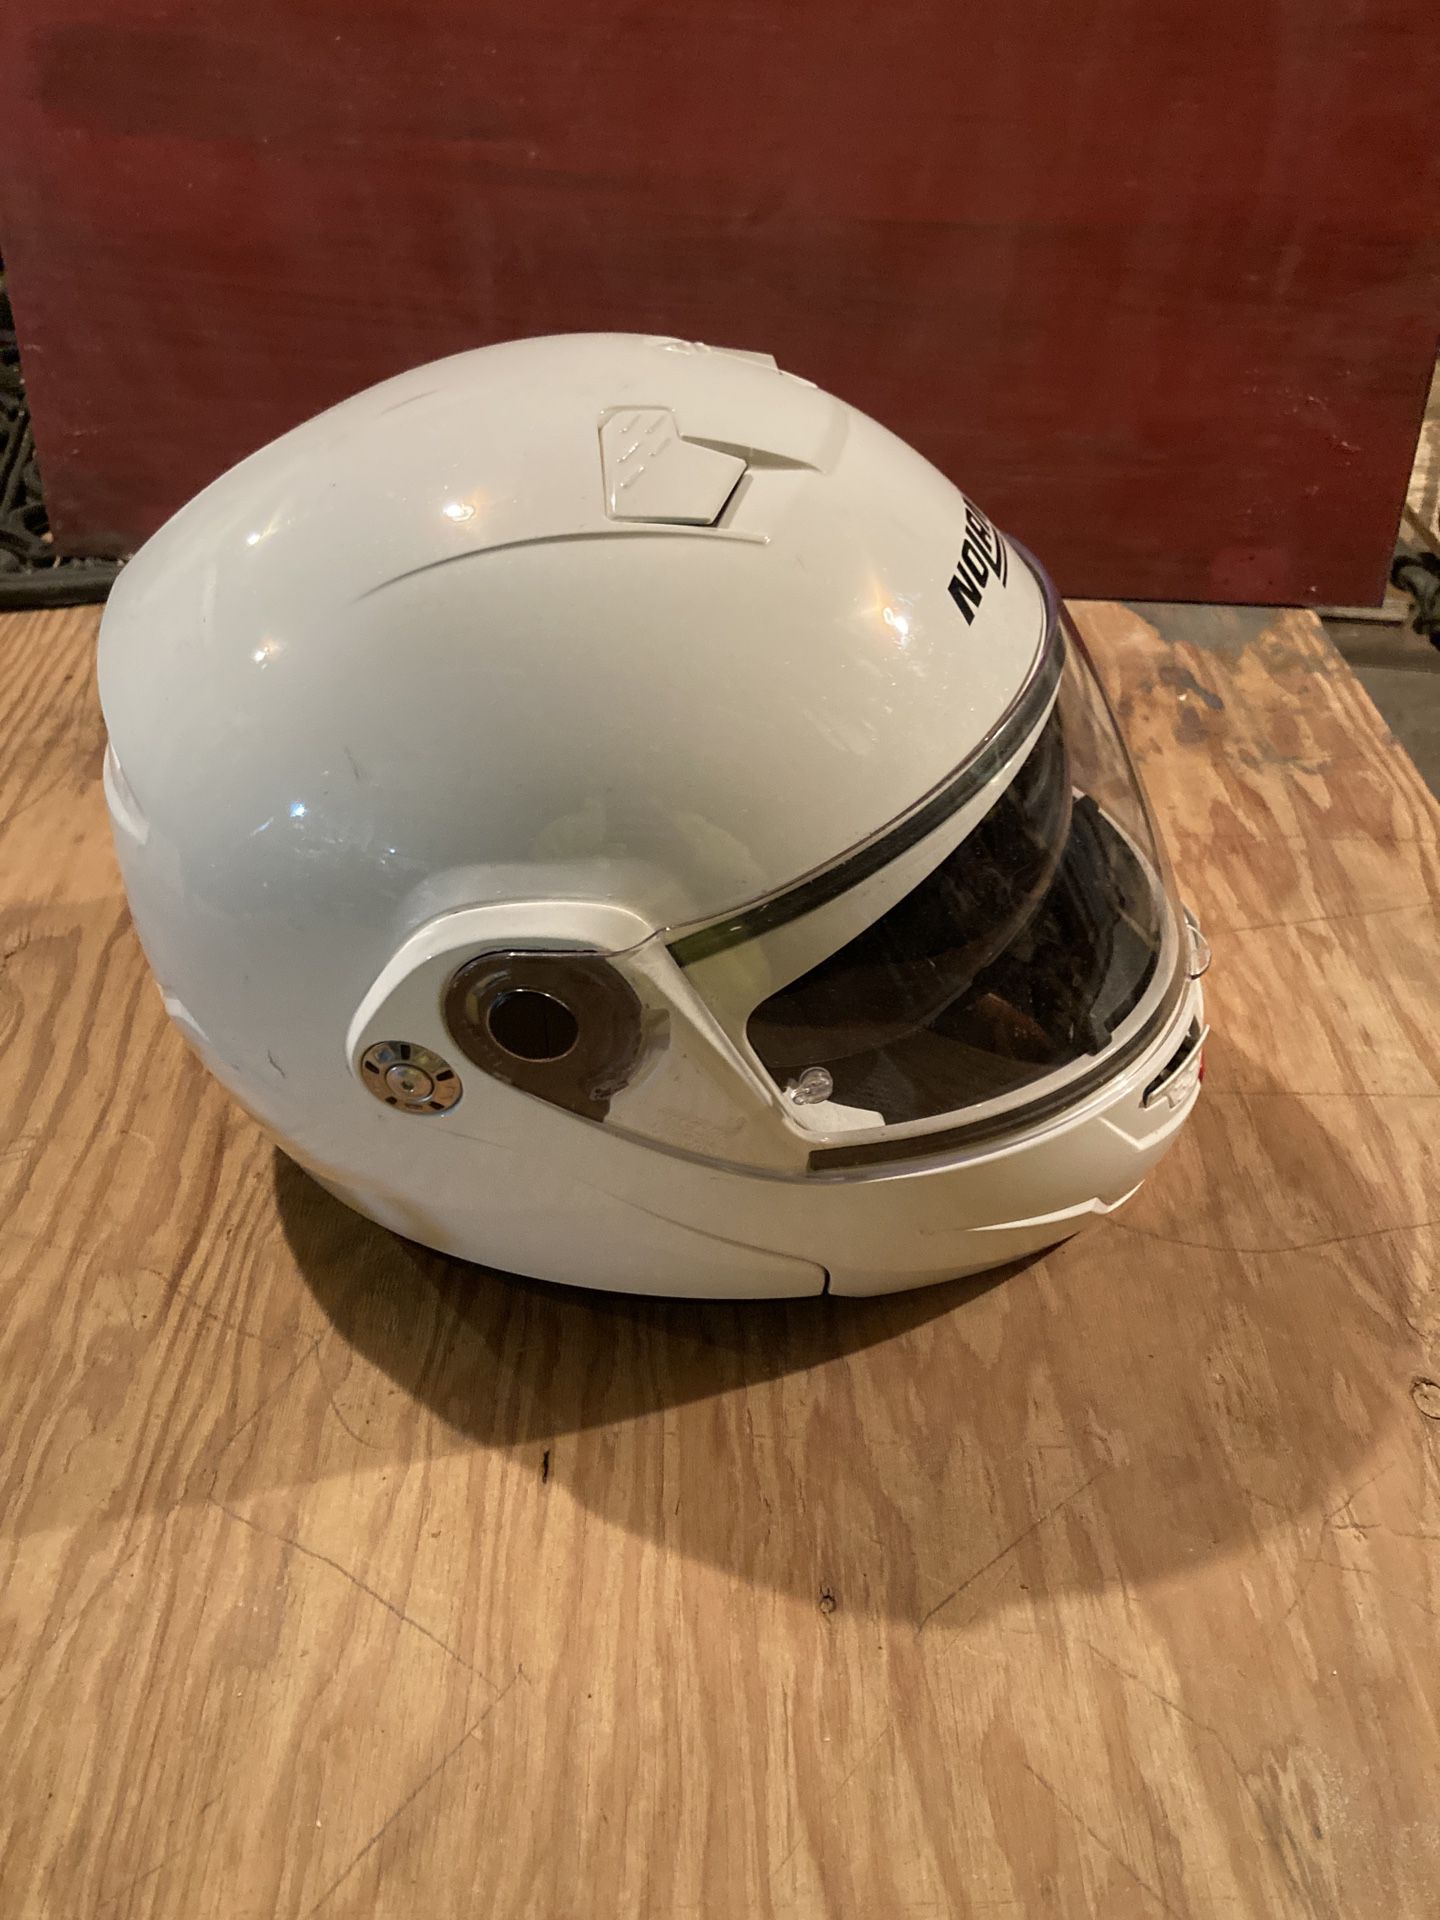 Nolan Motorcycle Helmet Size Med